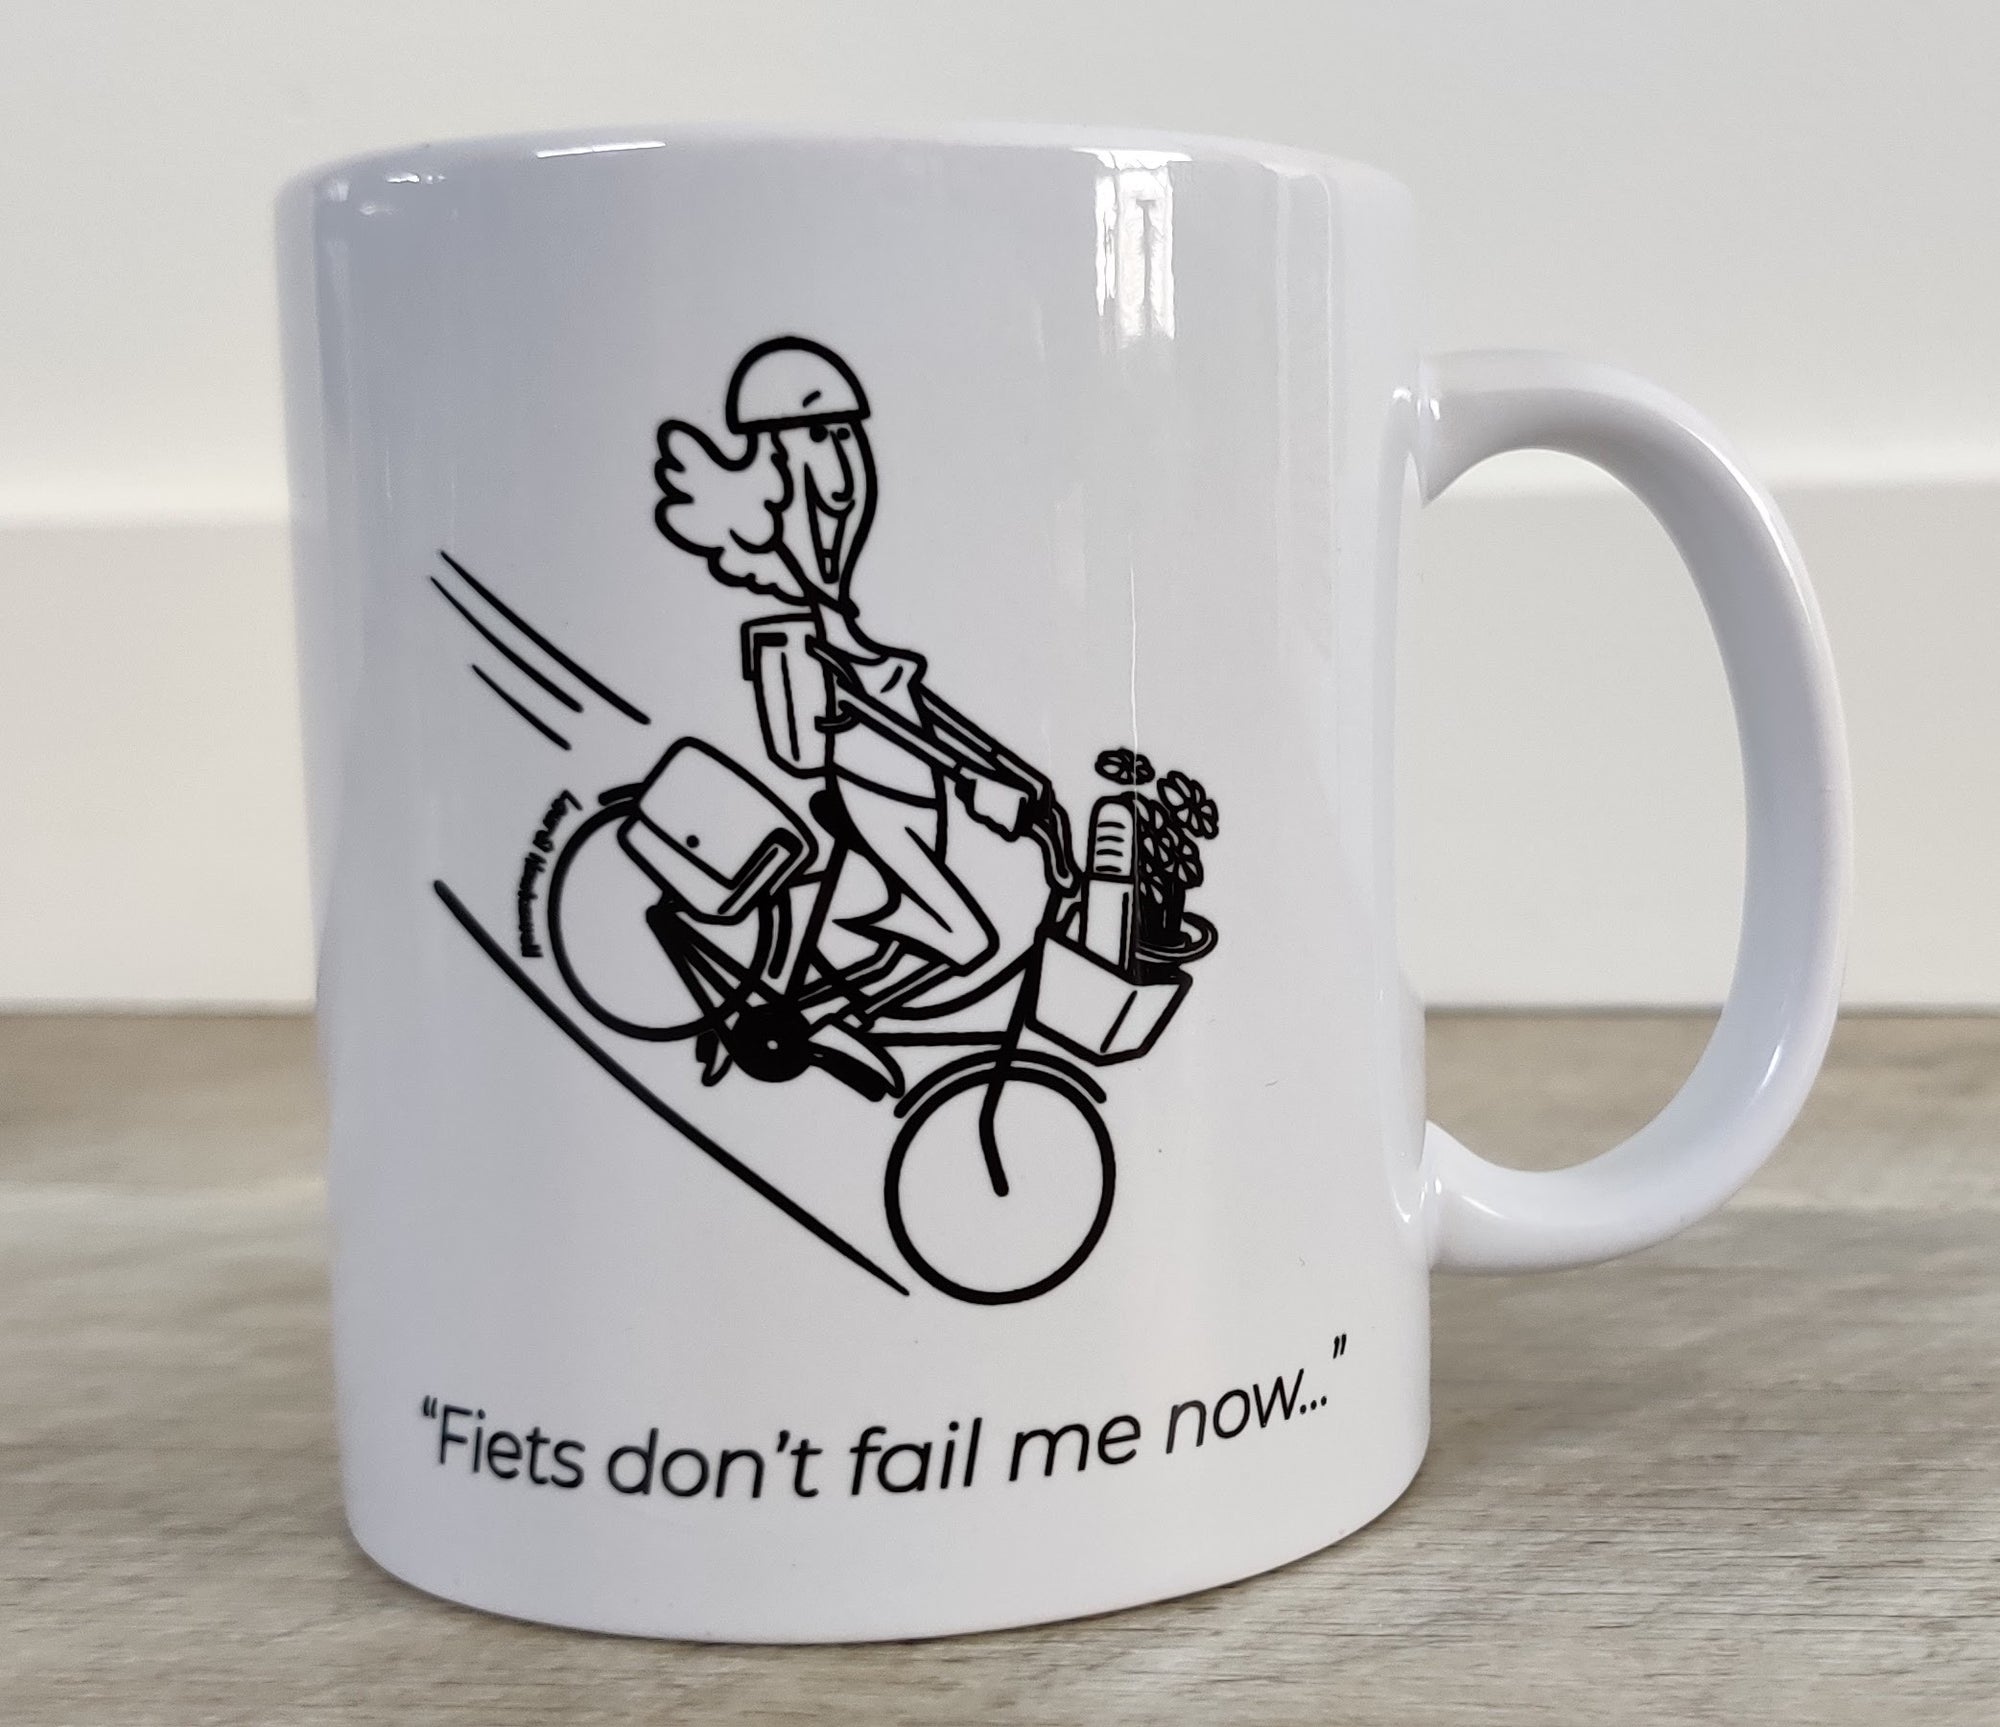 Fiets don't fail me now... Mug